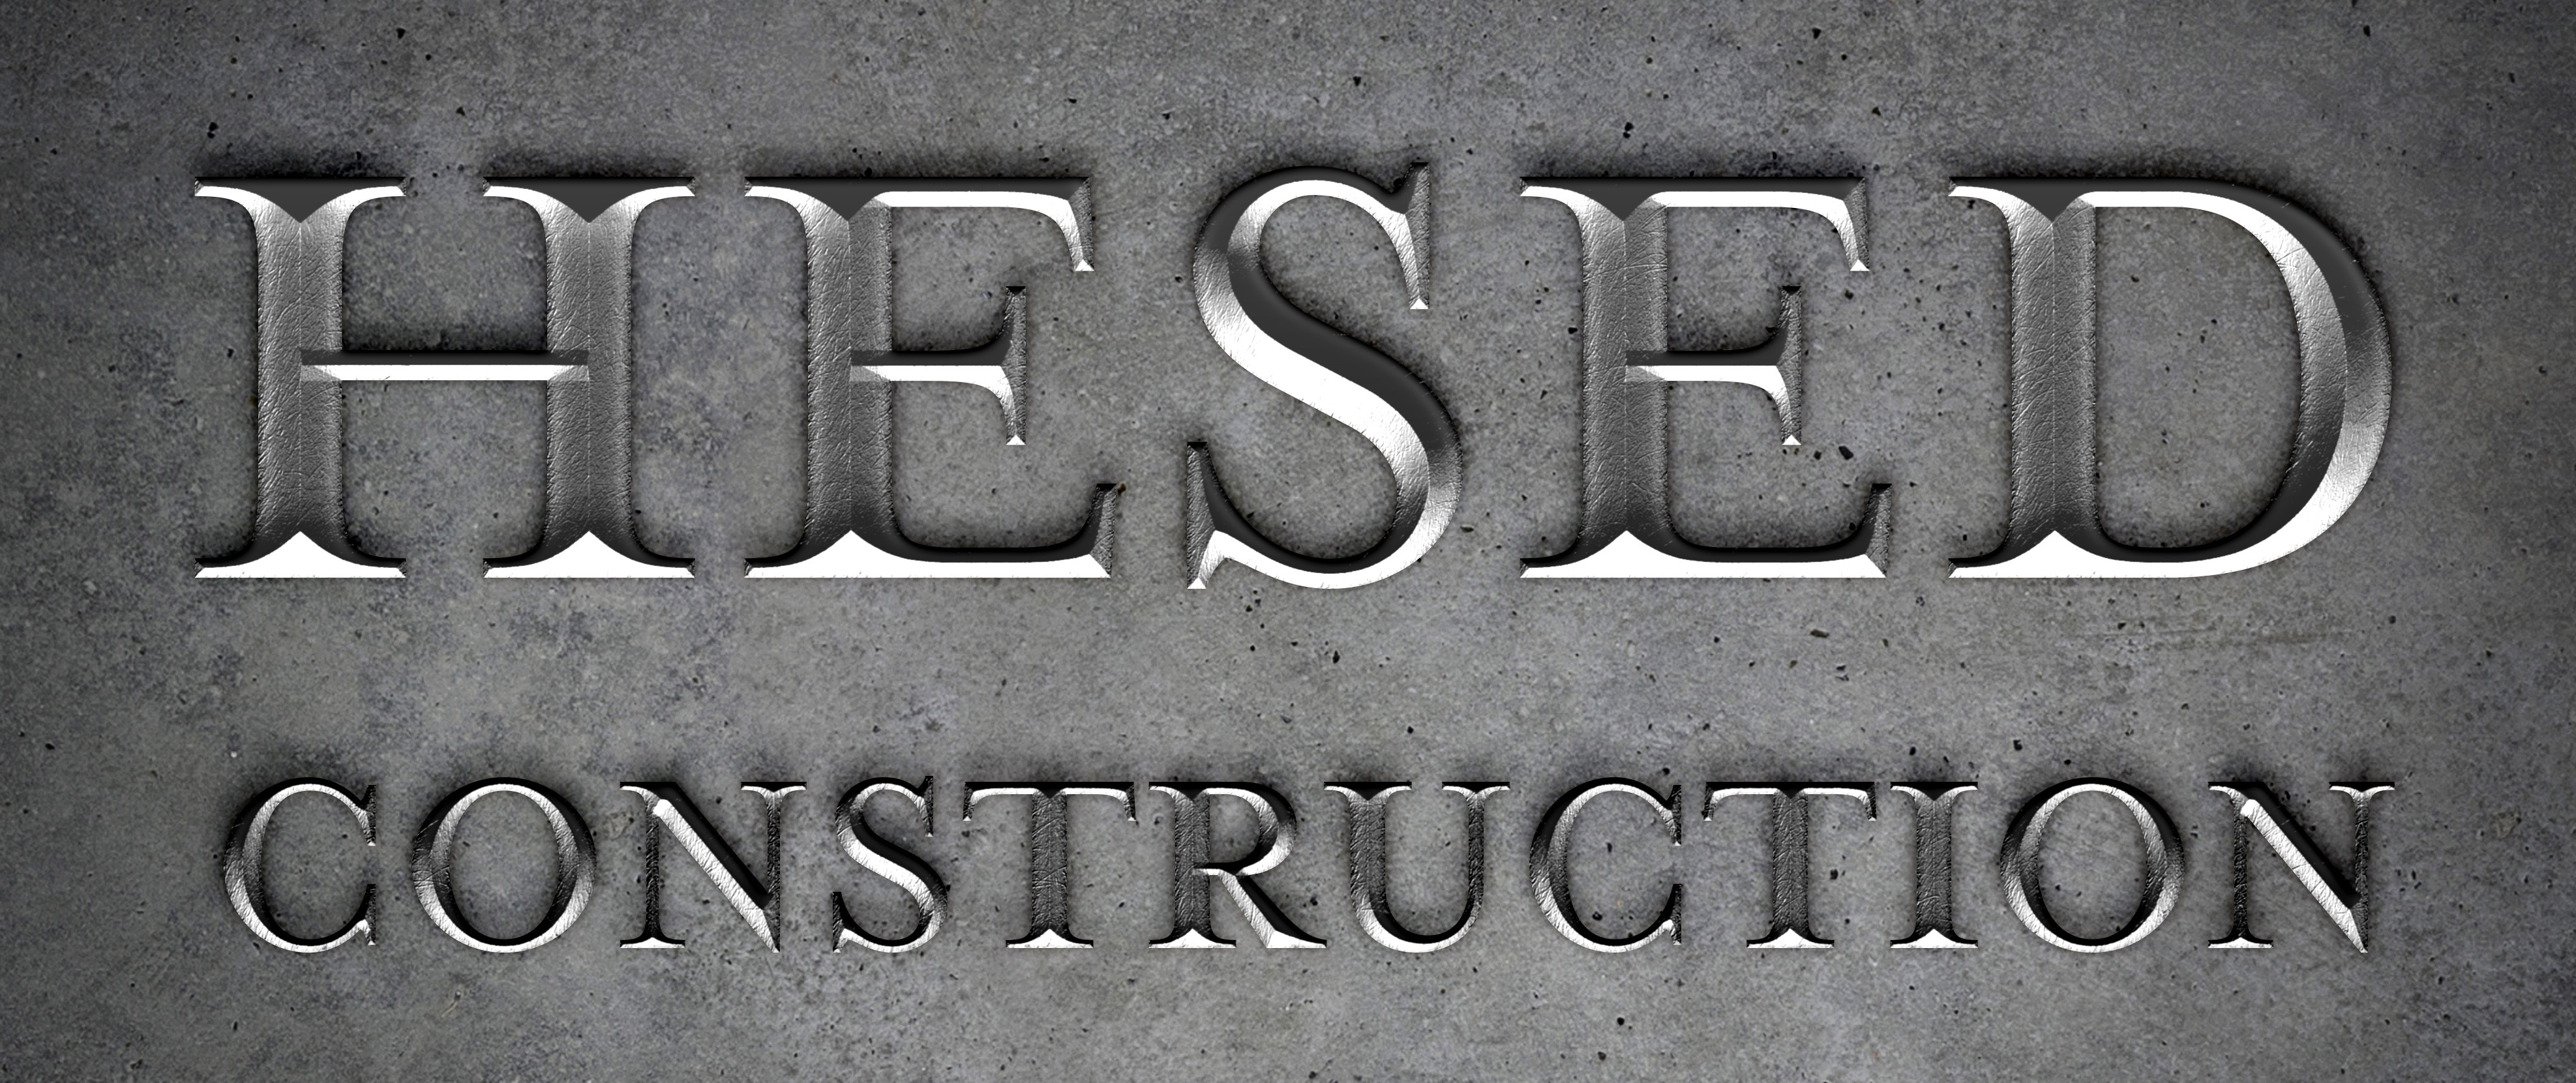 Hesed Constructions Logo